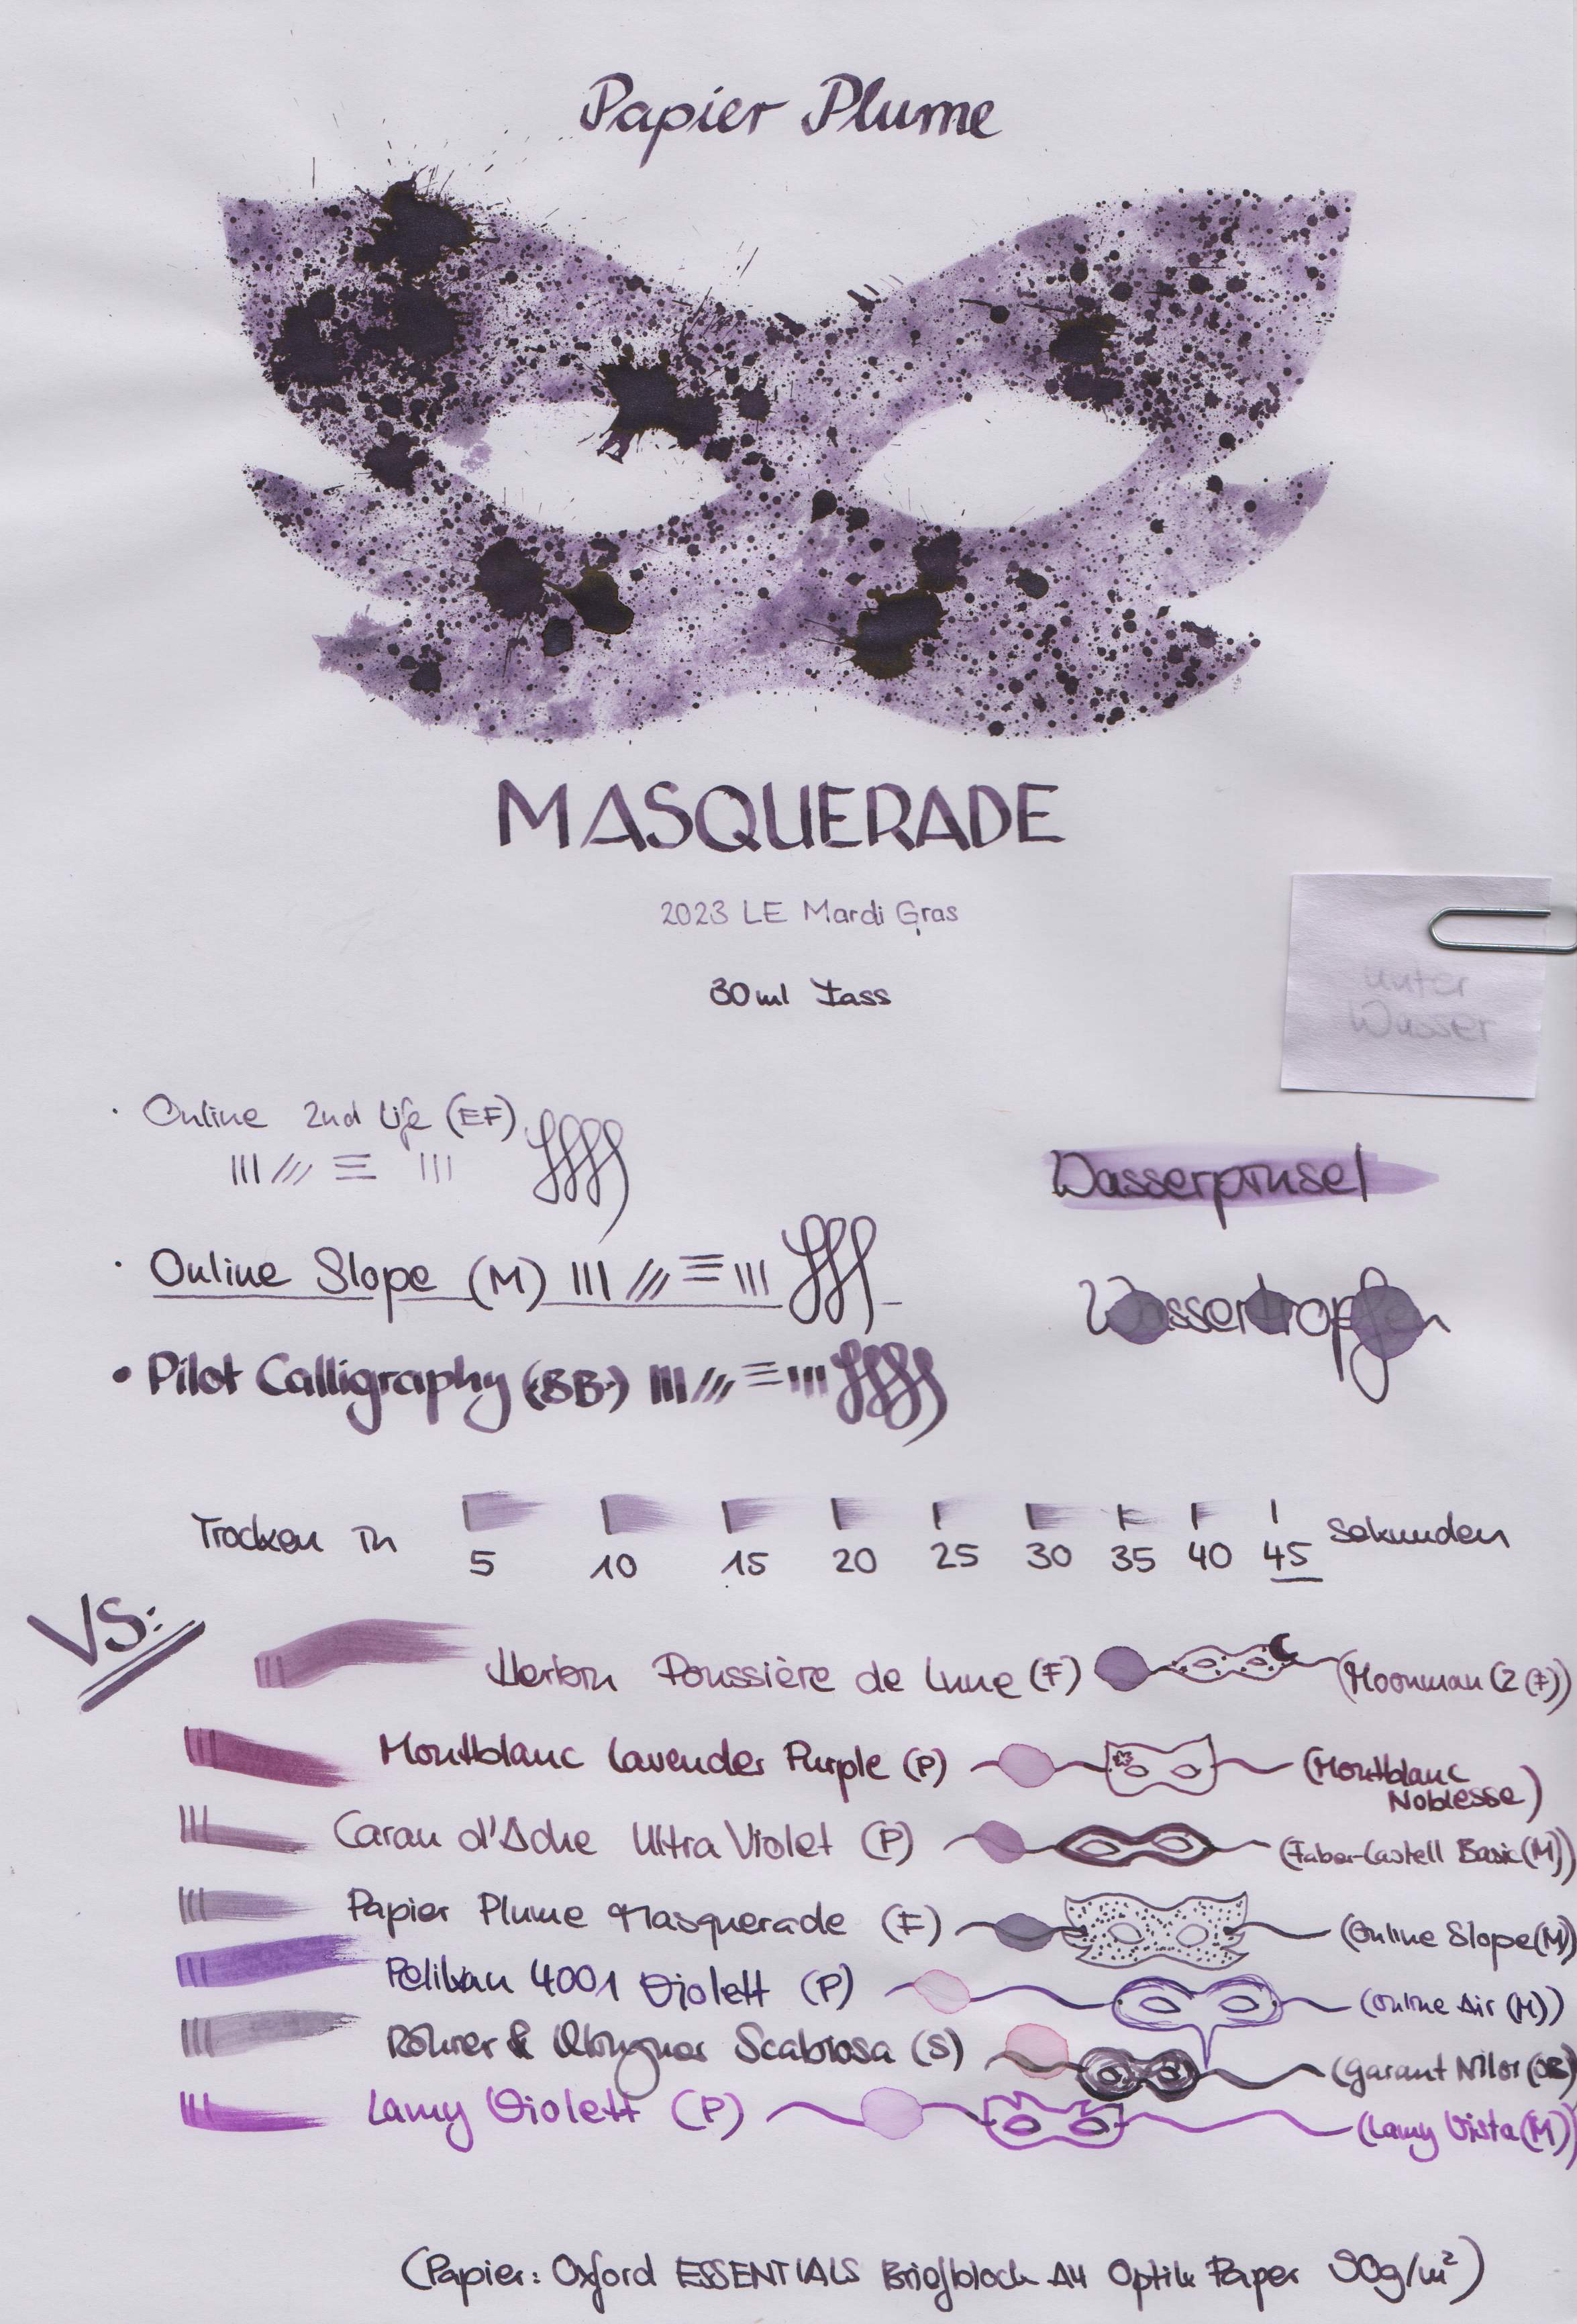 Papier Plume Masquerade - Scan.jpg